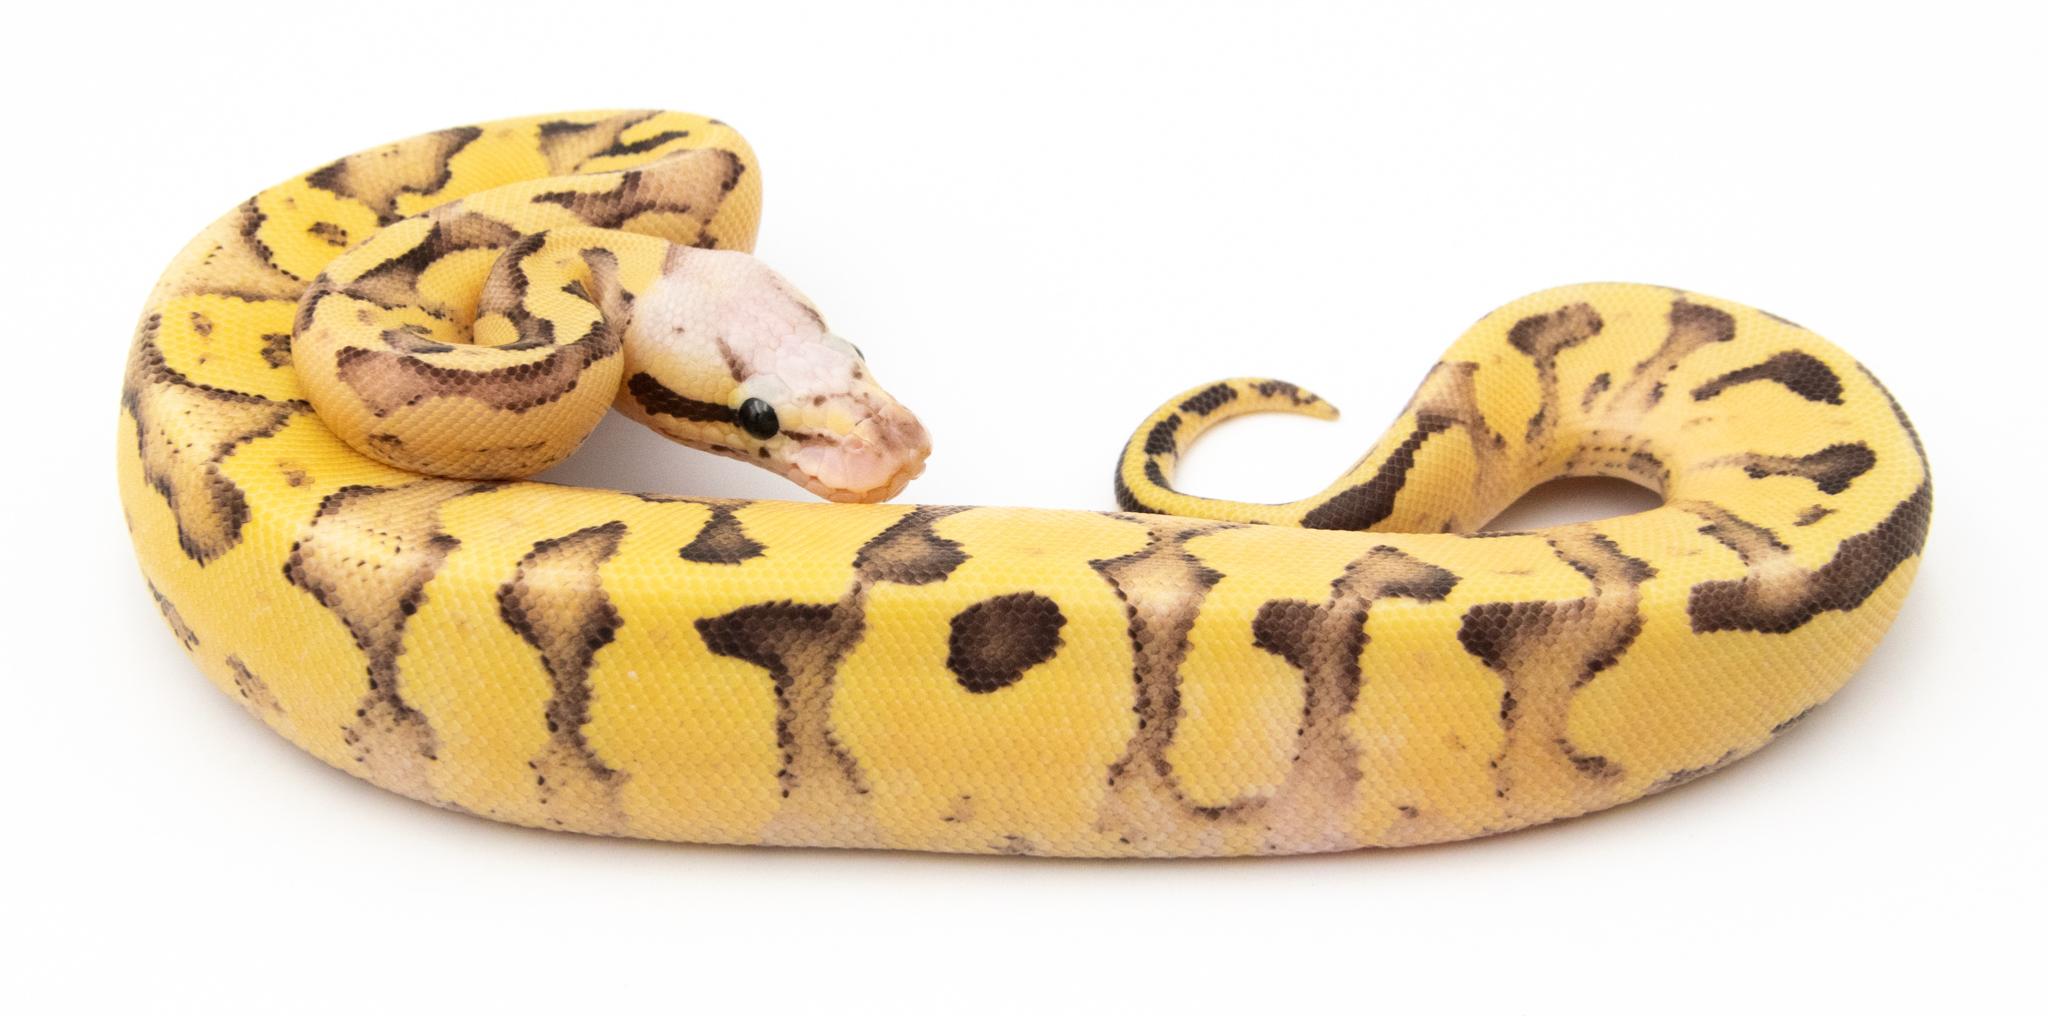 Python royal - Python Regius Vanilla Scream Butter